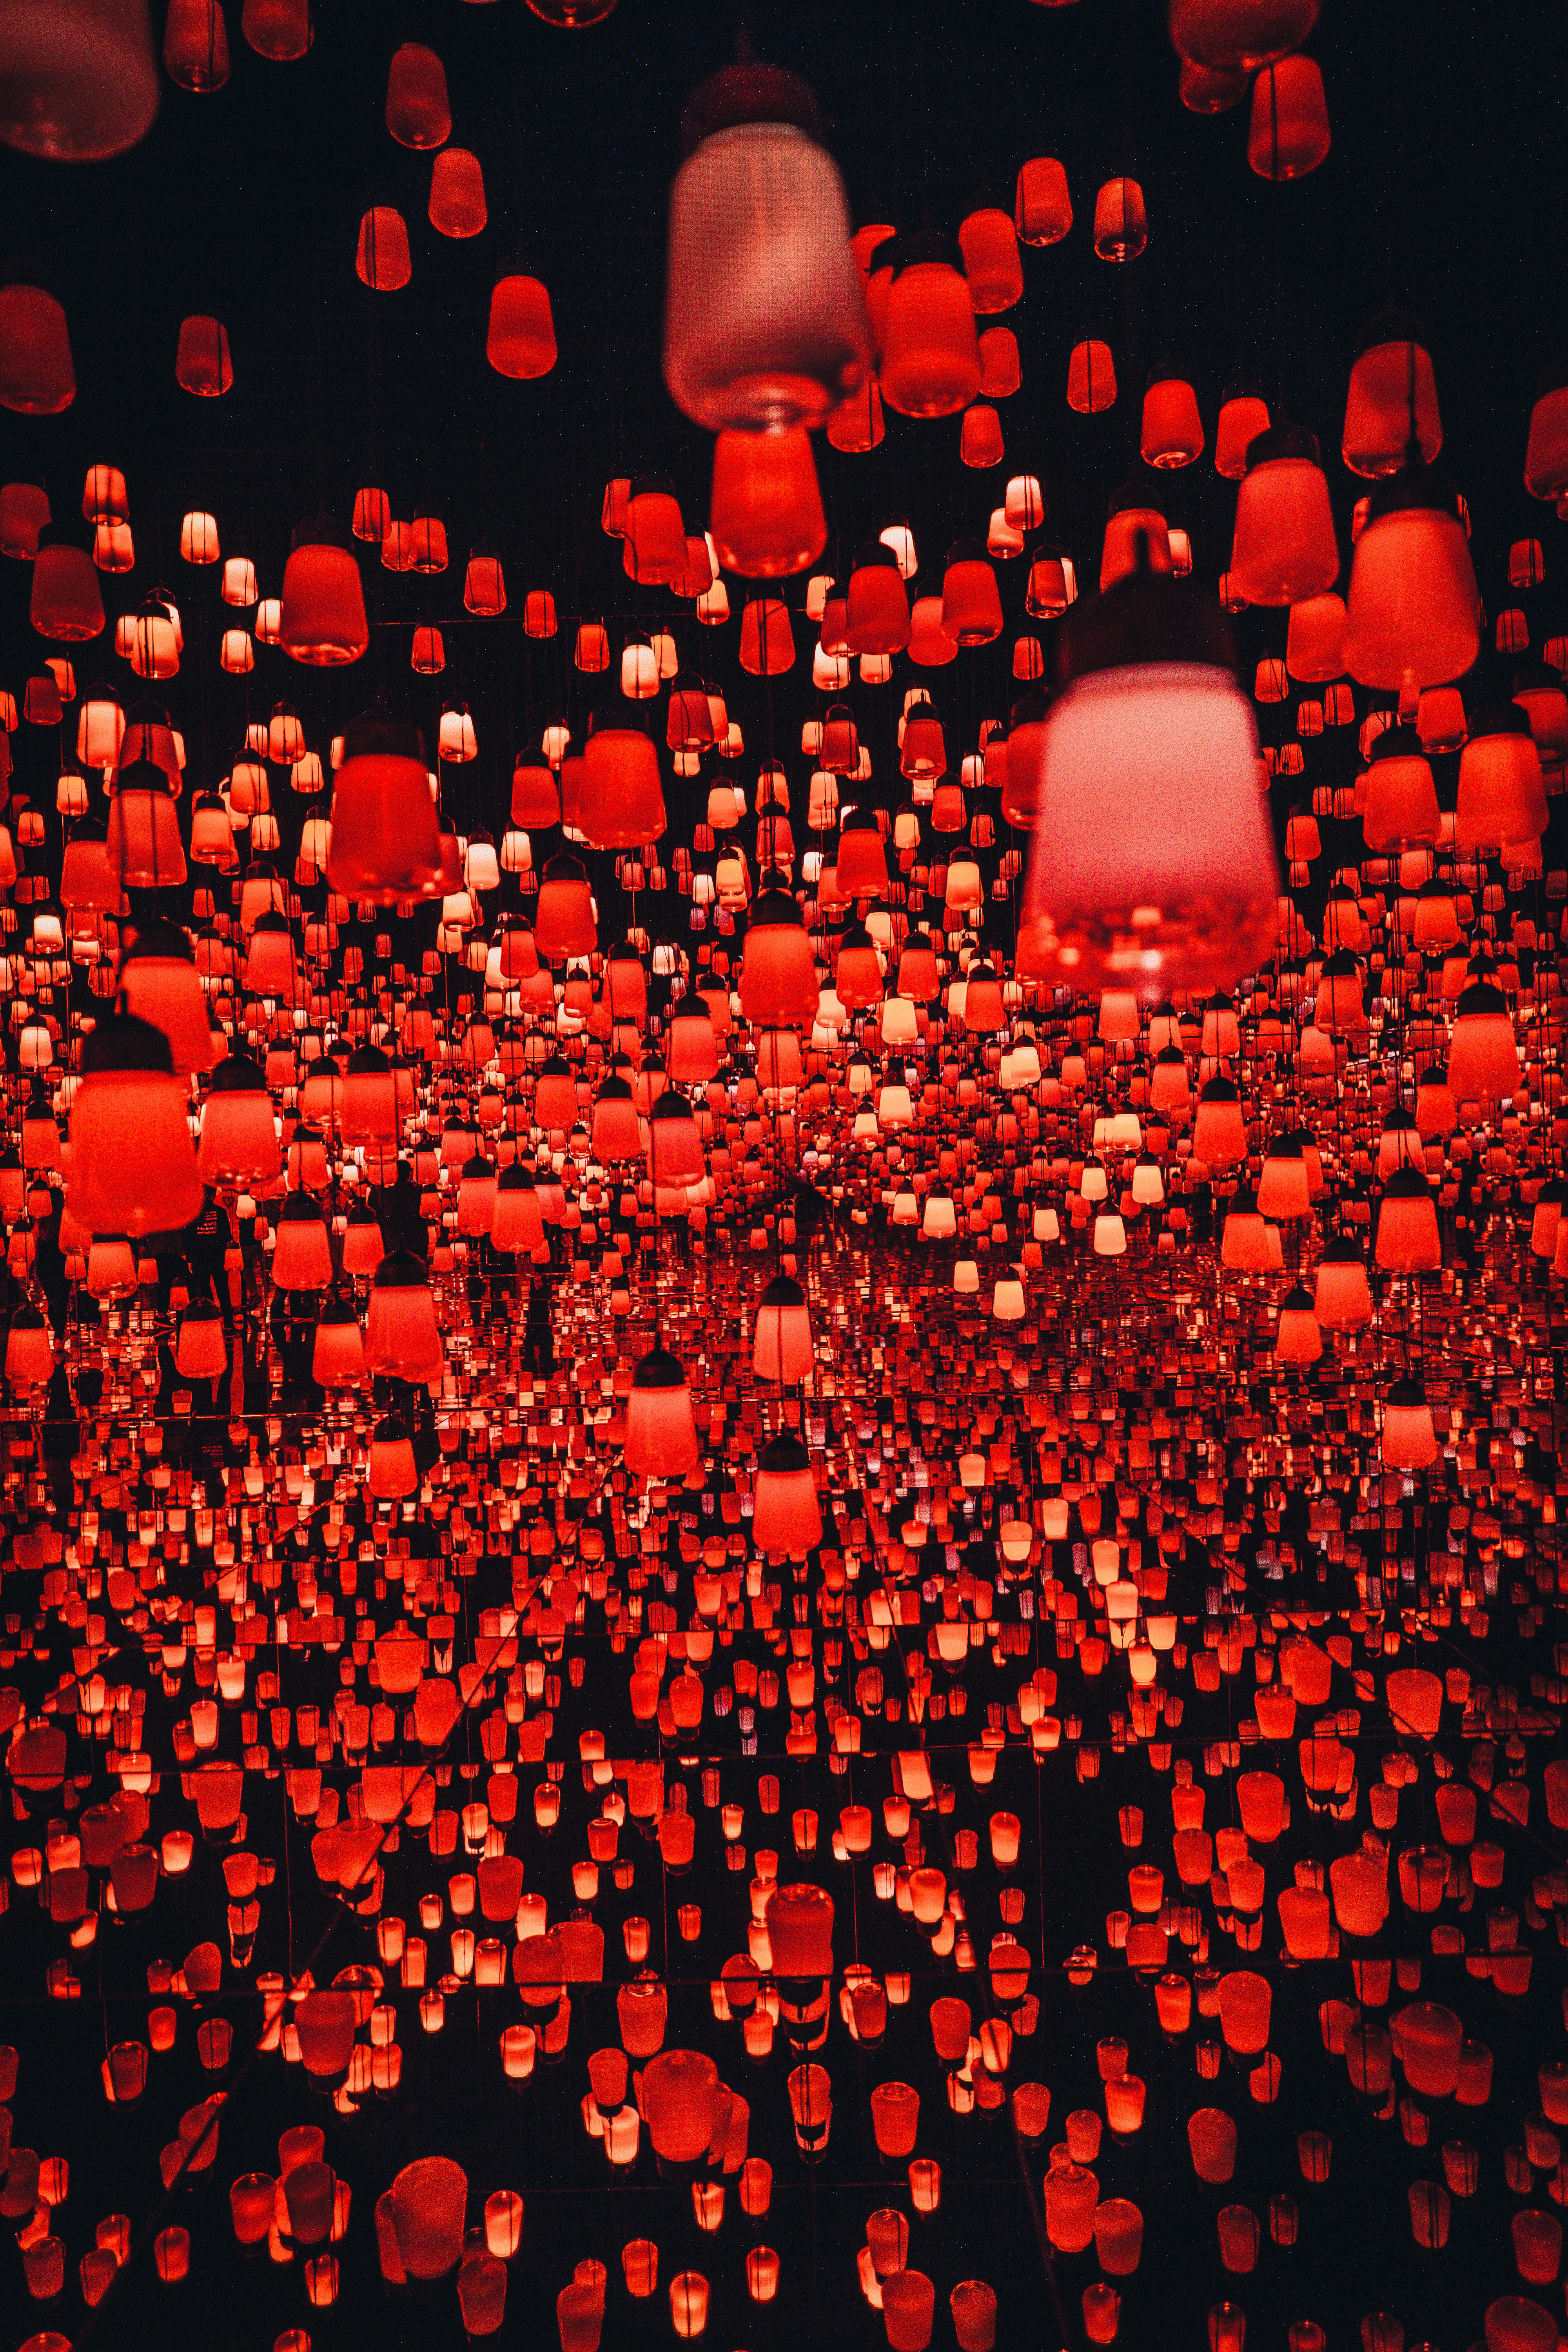 lights, light, red, shine, miscellanea, miscellaneous, lanterns, chinese lanterns High Definition image